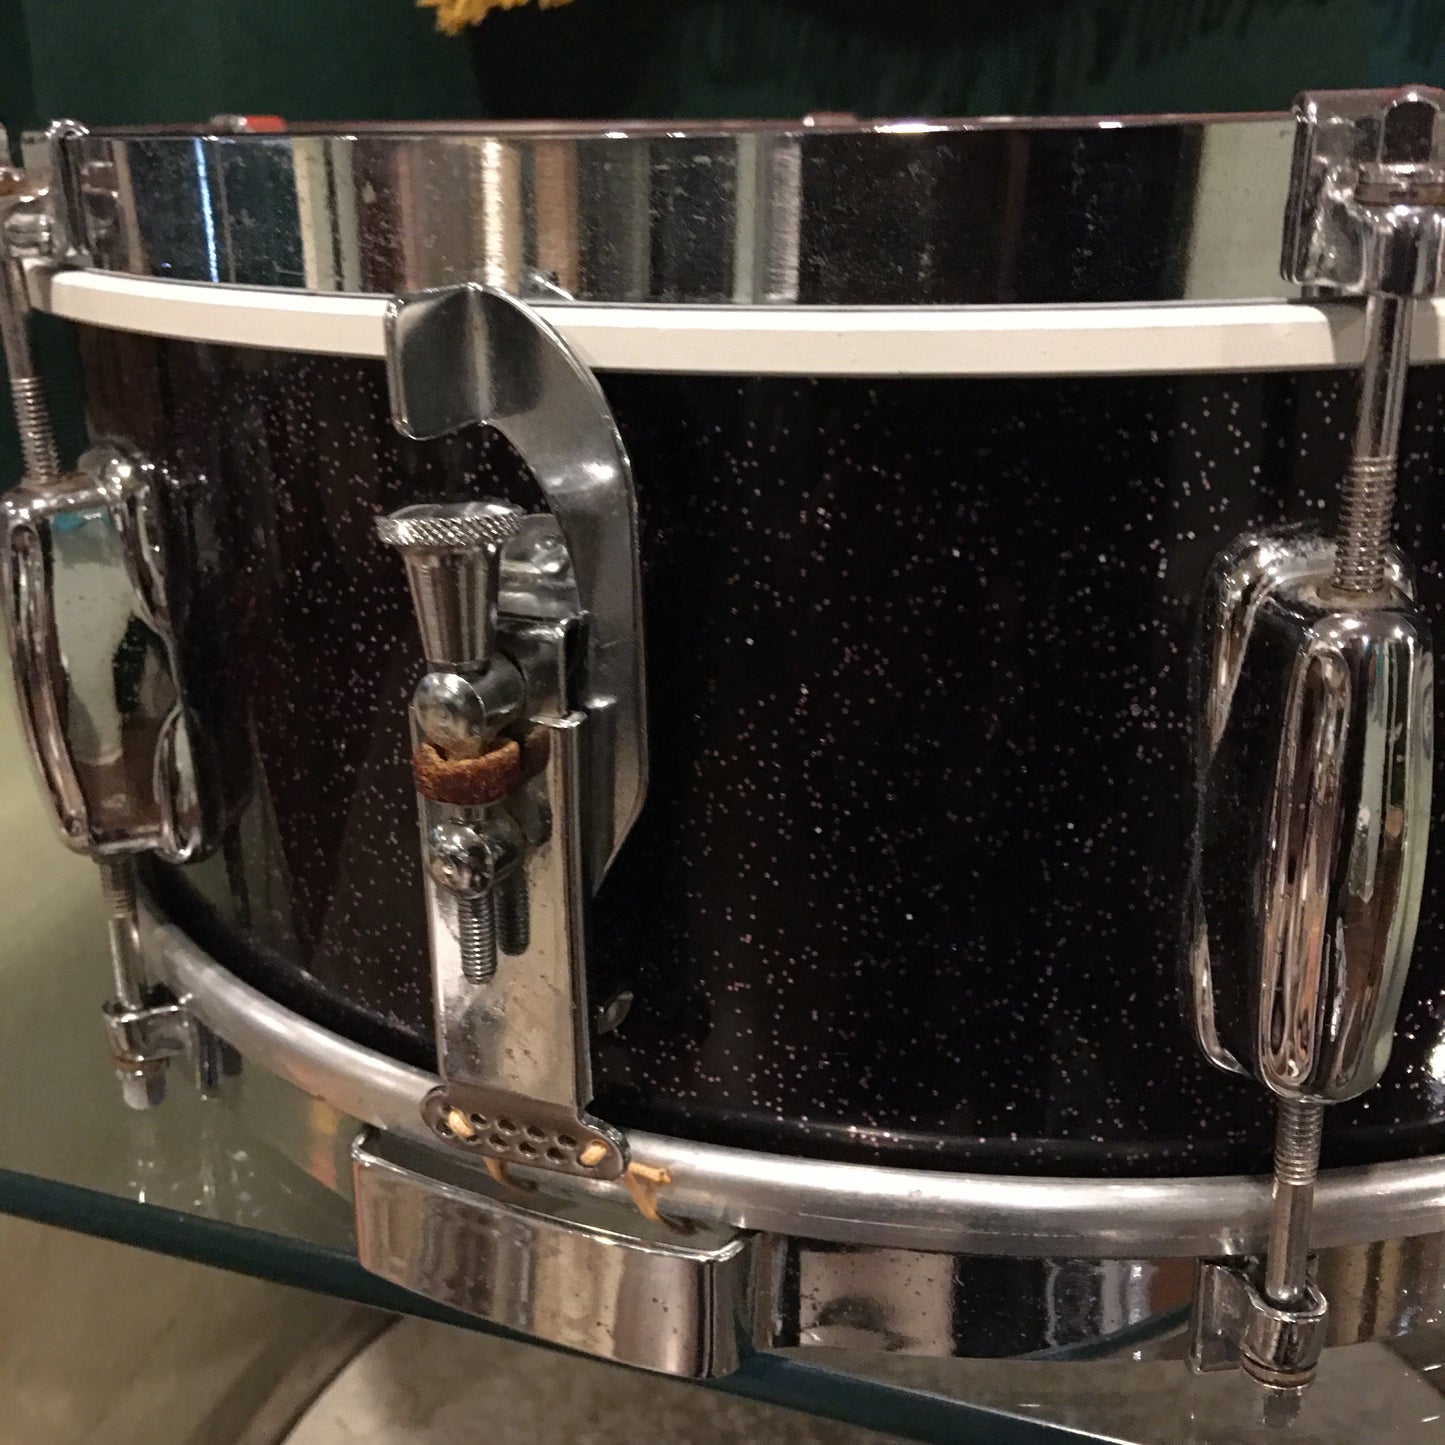 1966 Slingerland 5.5x14 Deluxe Student Model Snare Drum Black Sparkle